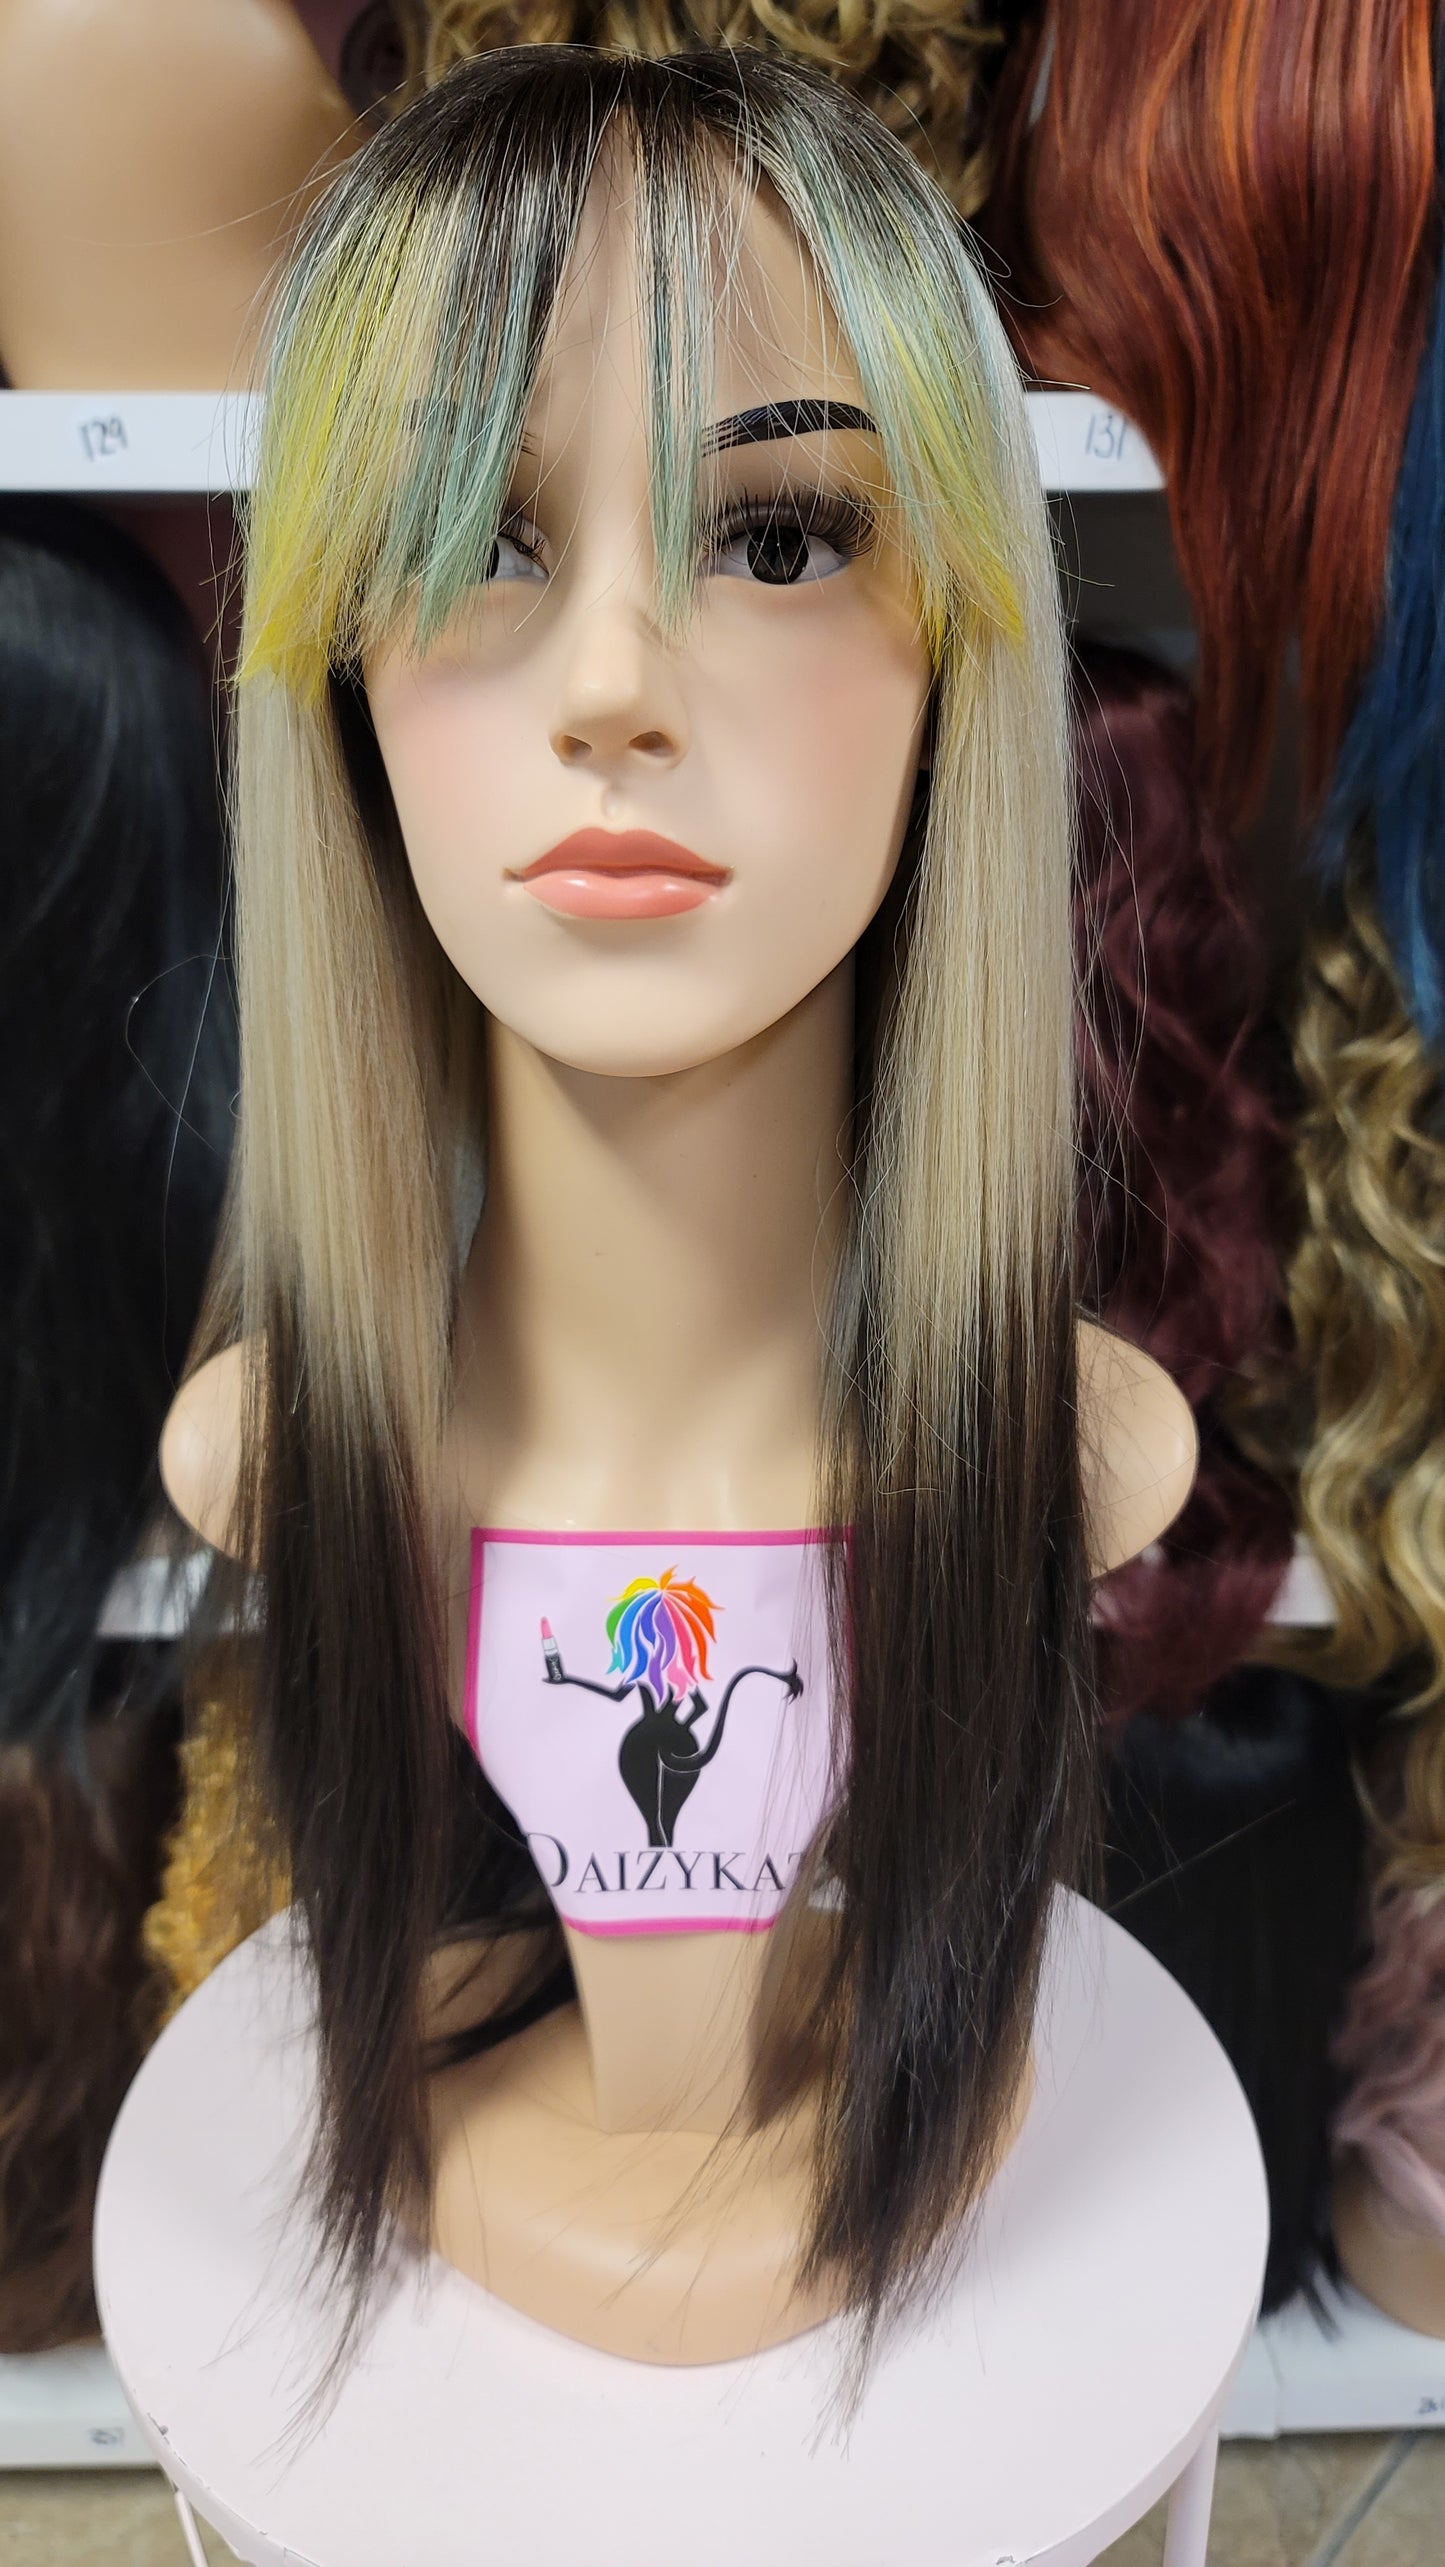 441 Rue - Classy Bangs Wig - 4/613/PASTEL - DaizyKat Cosmetics 441 Rue - Classy Bangs Wig - 4/613/PASTEL DaizyKat Cosmetics Wigs